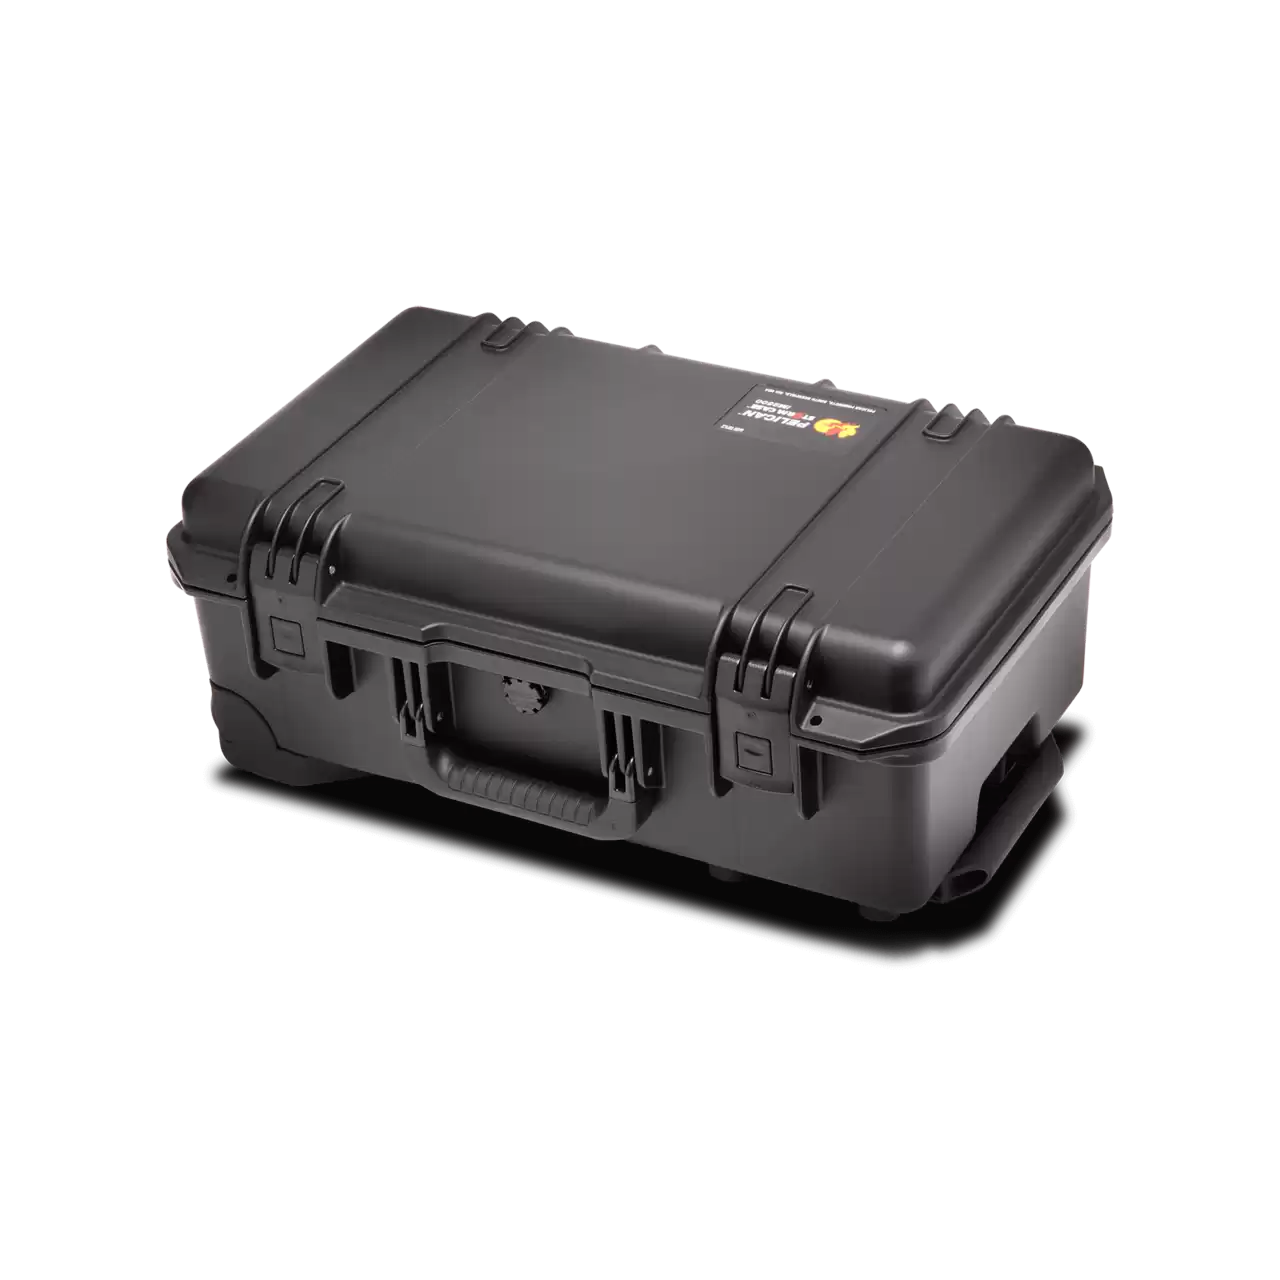 SanDisk Professional G-RAID SHUTTLE 8 Pelican iM2500 Storm Carry-On Case